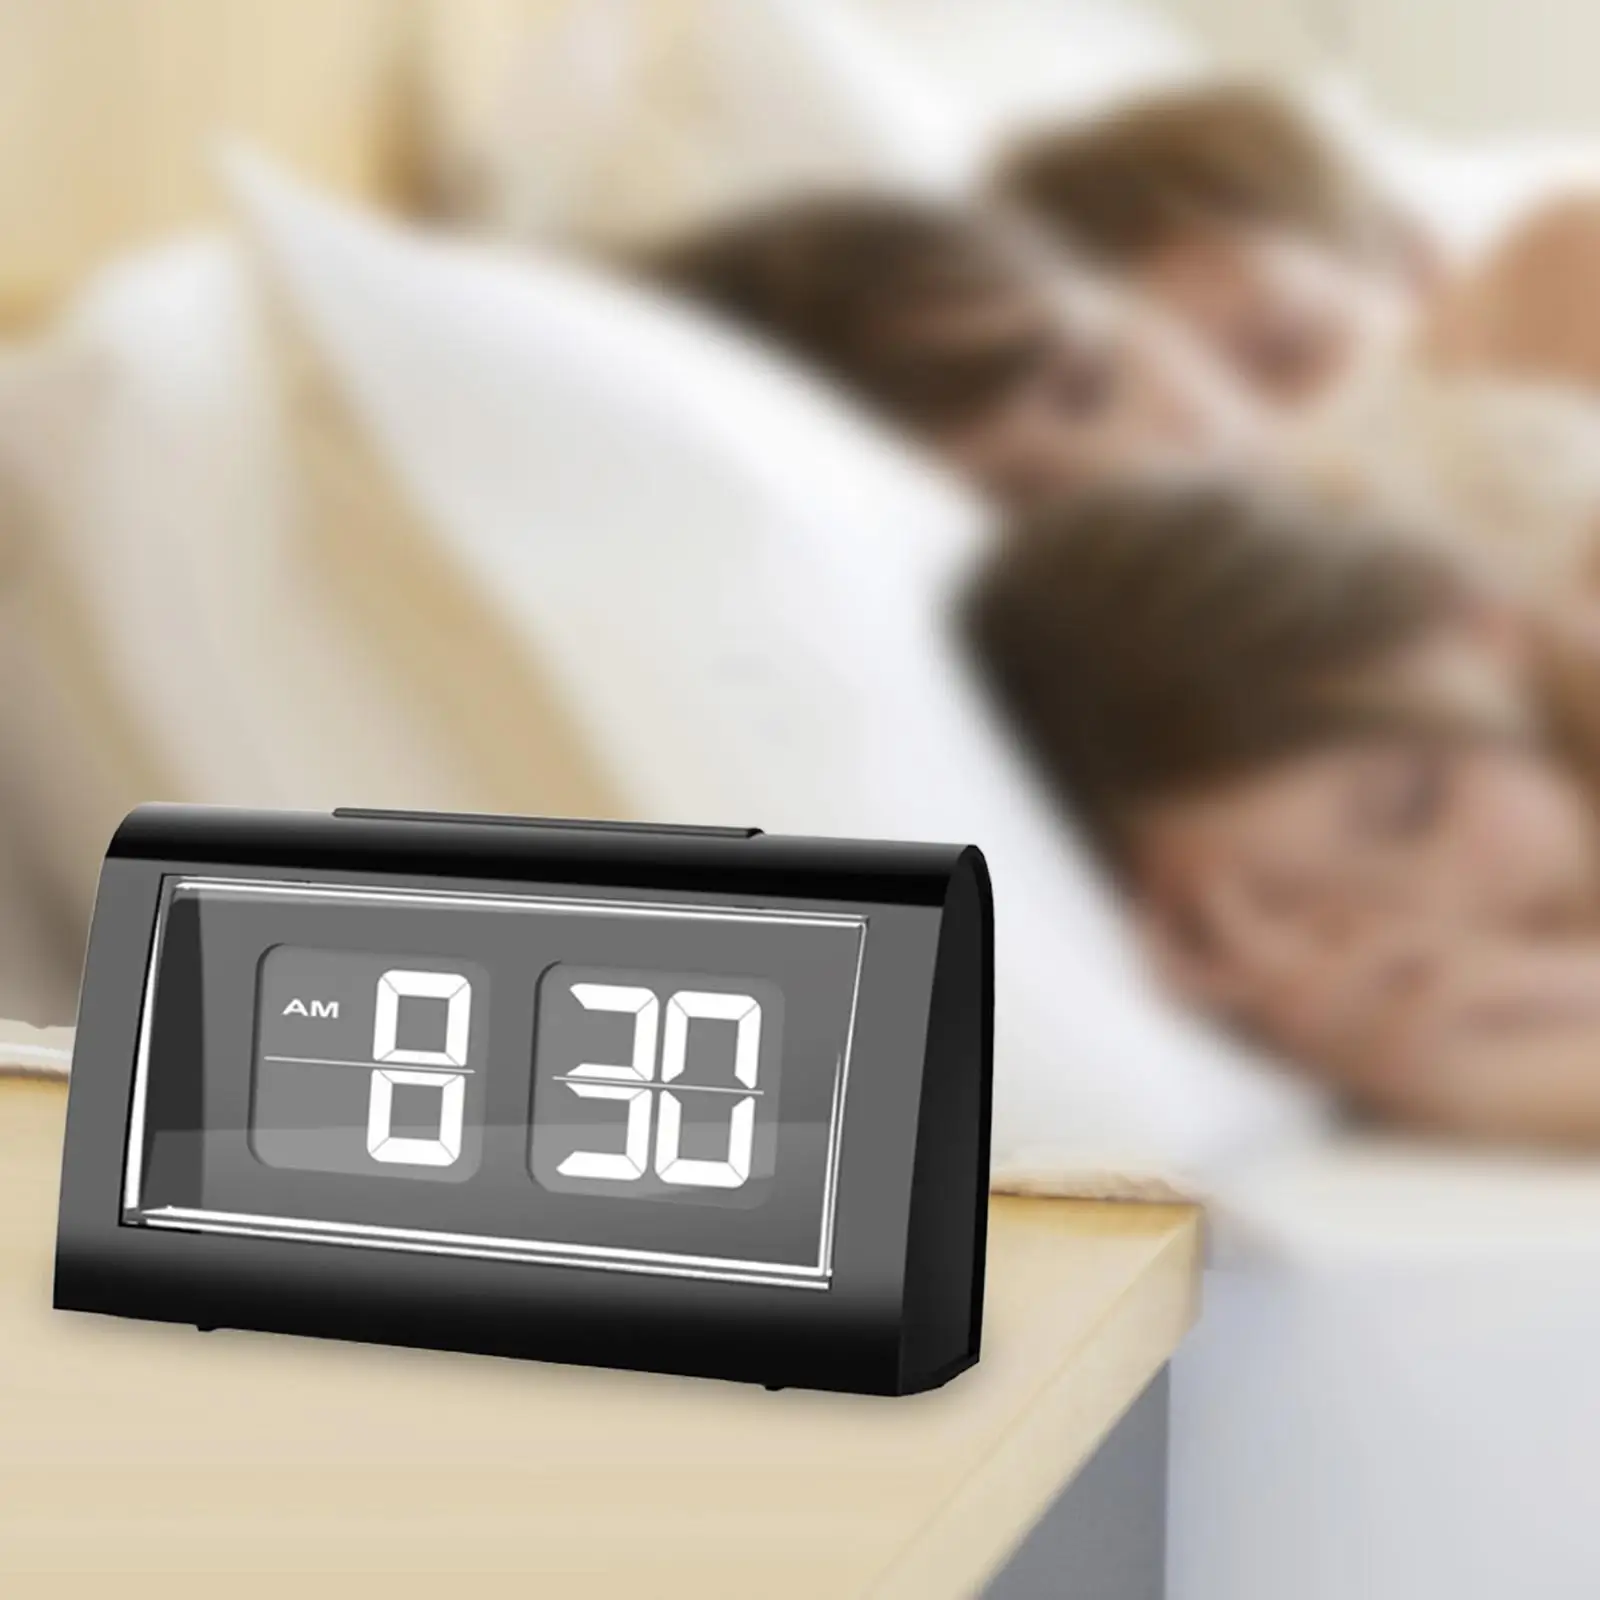 Flip Desk Clock Decor Electric Digital Clock Large Display Auto Flip Digital Alarm Clock for Works Hotel Dining Table Bedroom